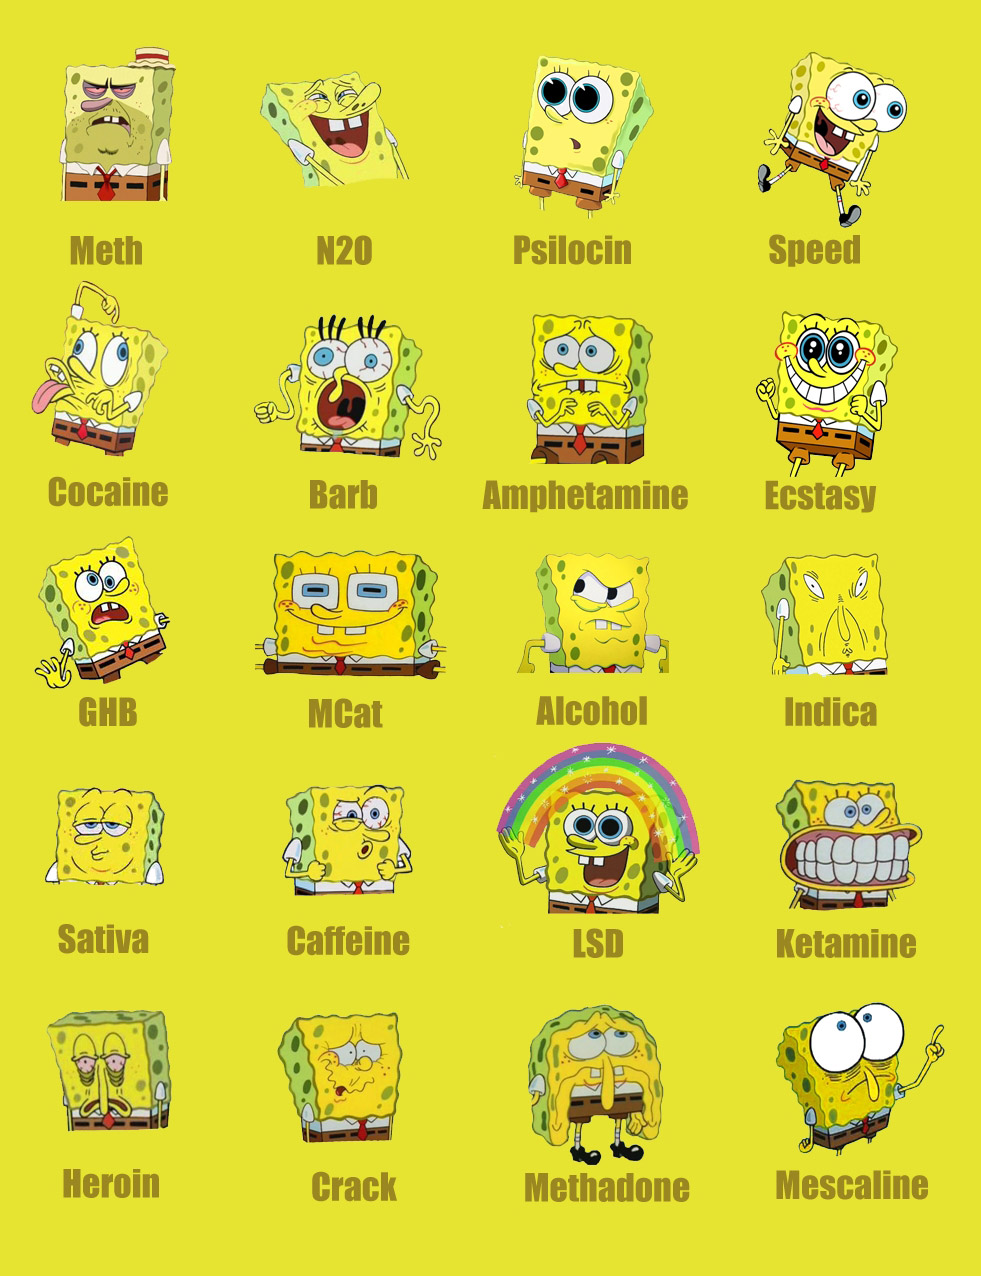 spongebob_on_drugs.jpg